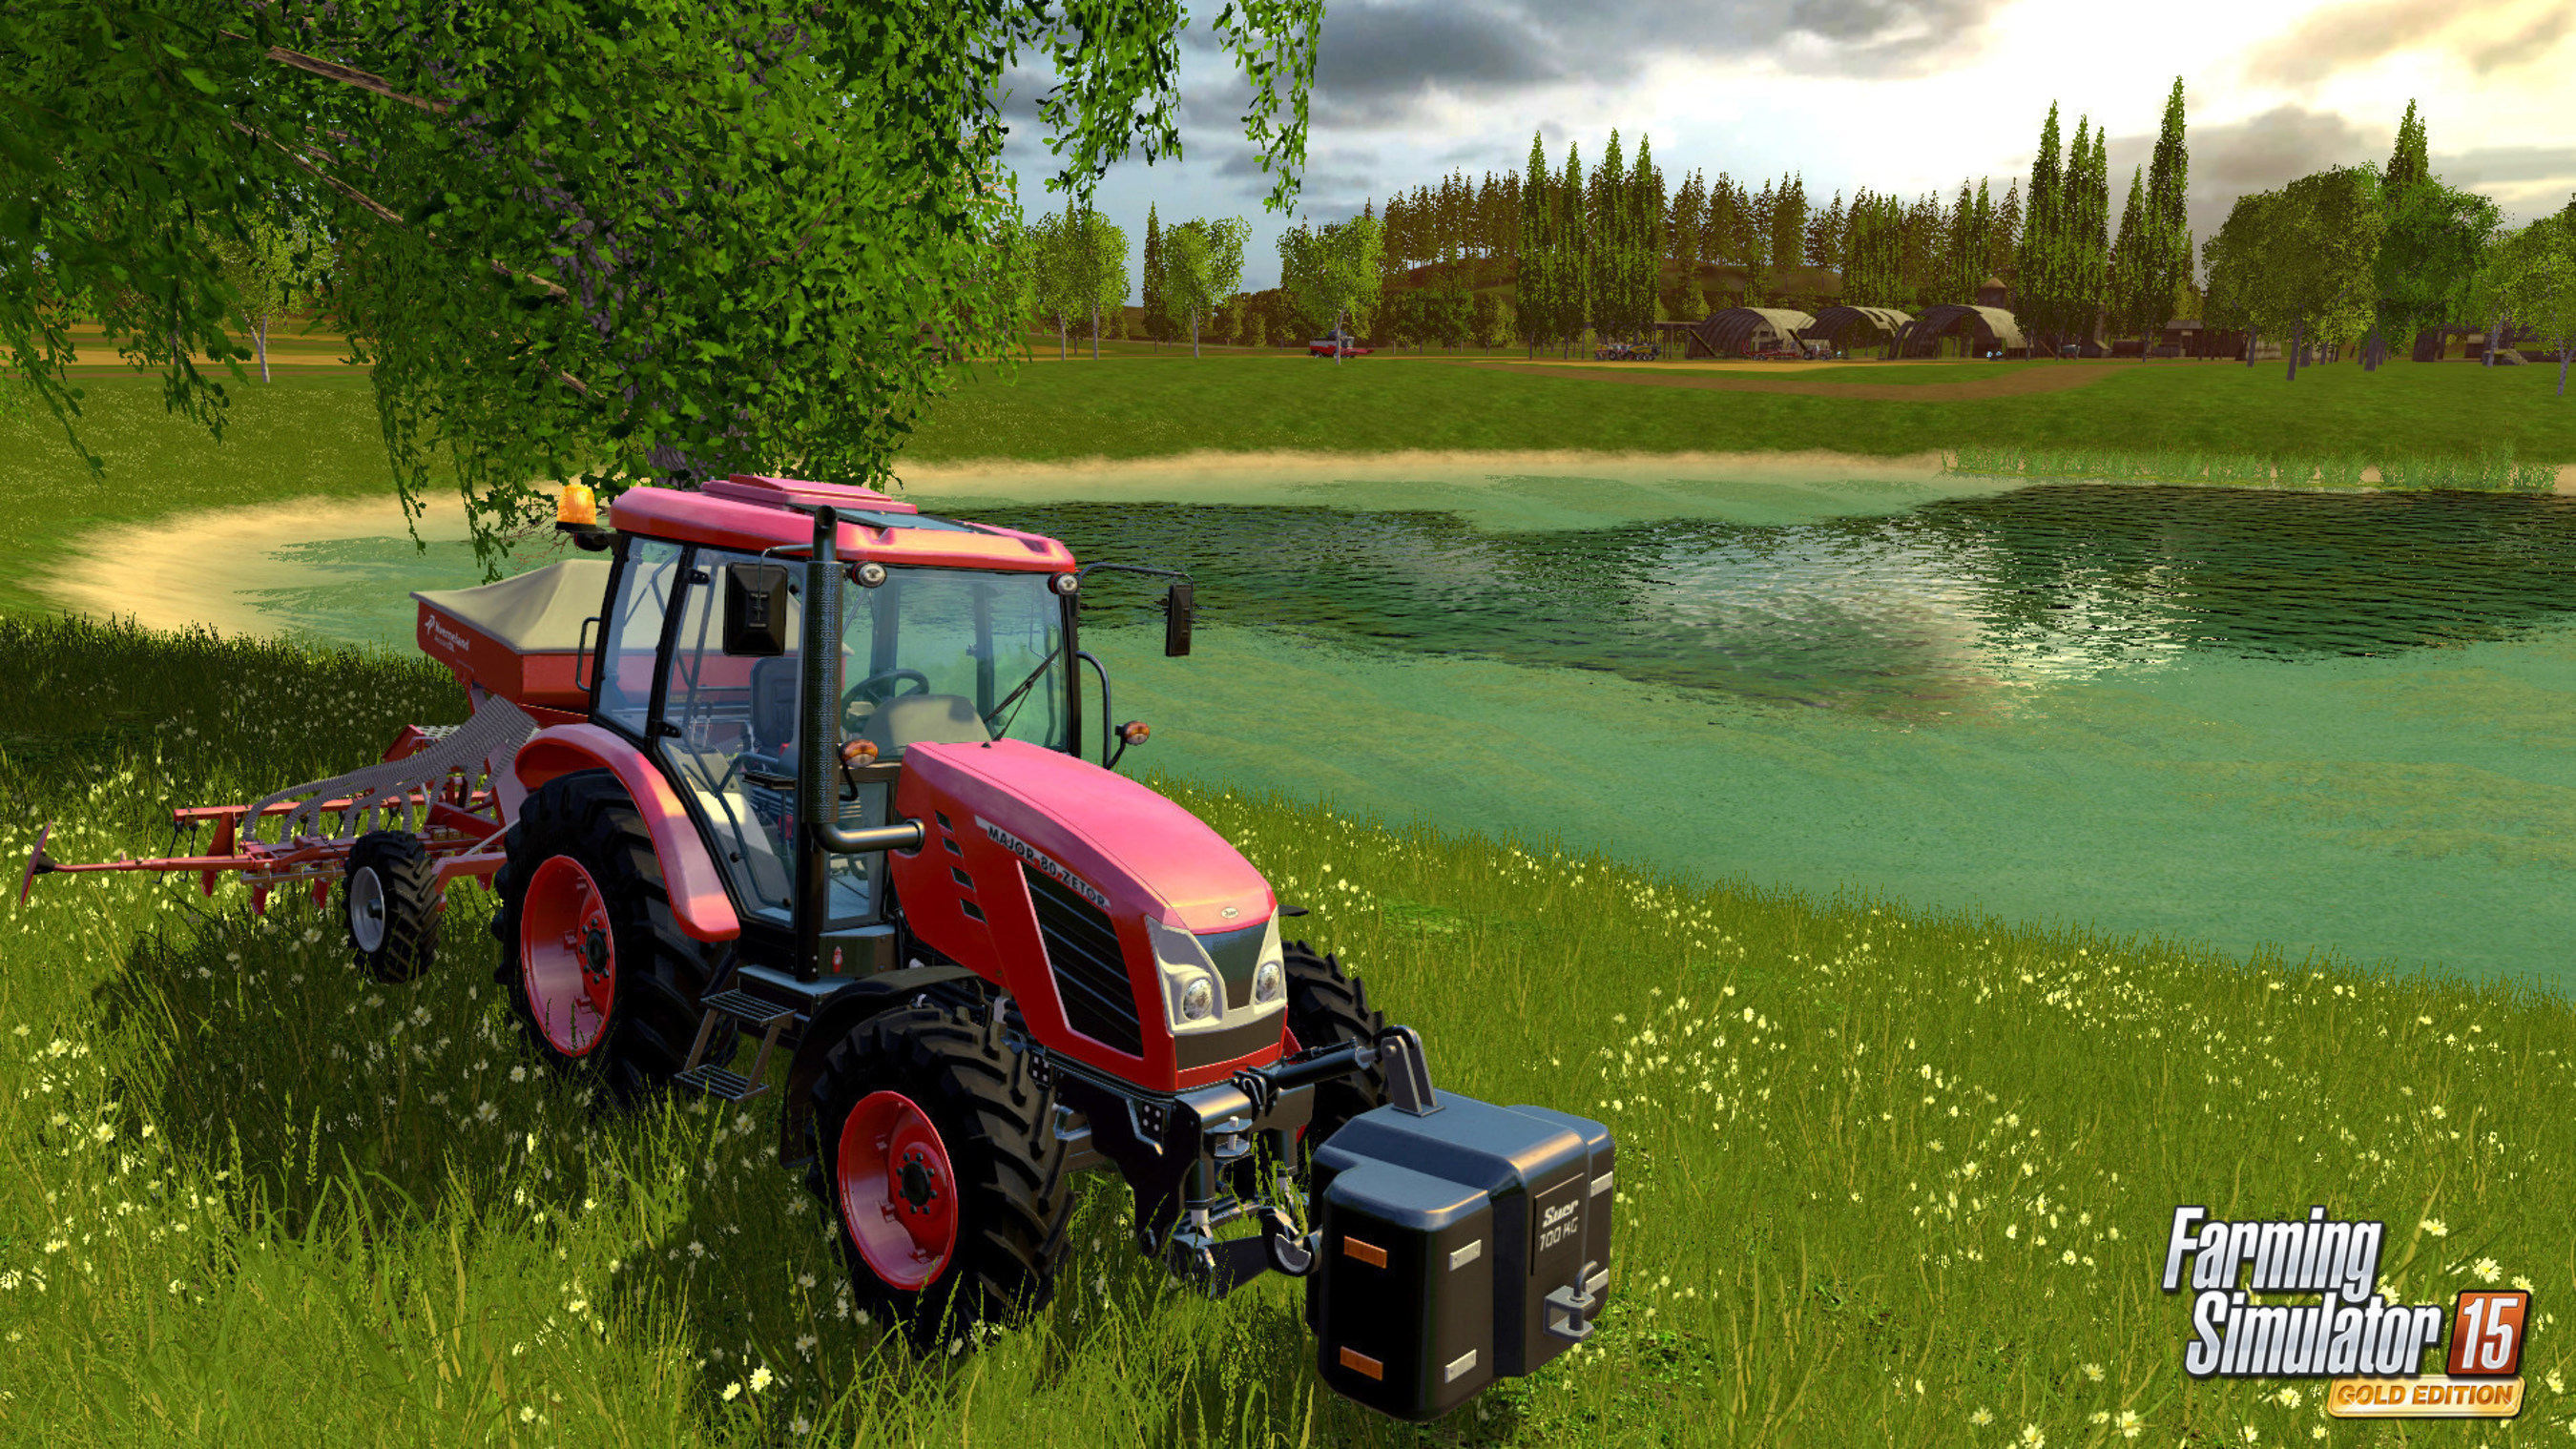 Farming simulator новая игра. Фермер симулятор 15 Голд эдишн. Фармирк симулятоор17. Фарминг симулятор 17. Farming Simulator 22.